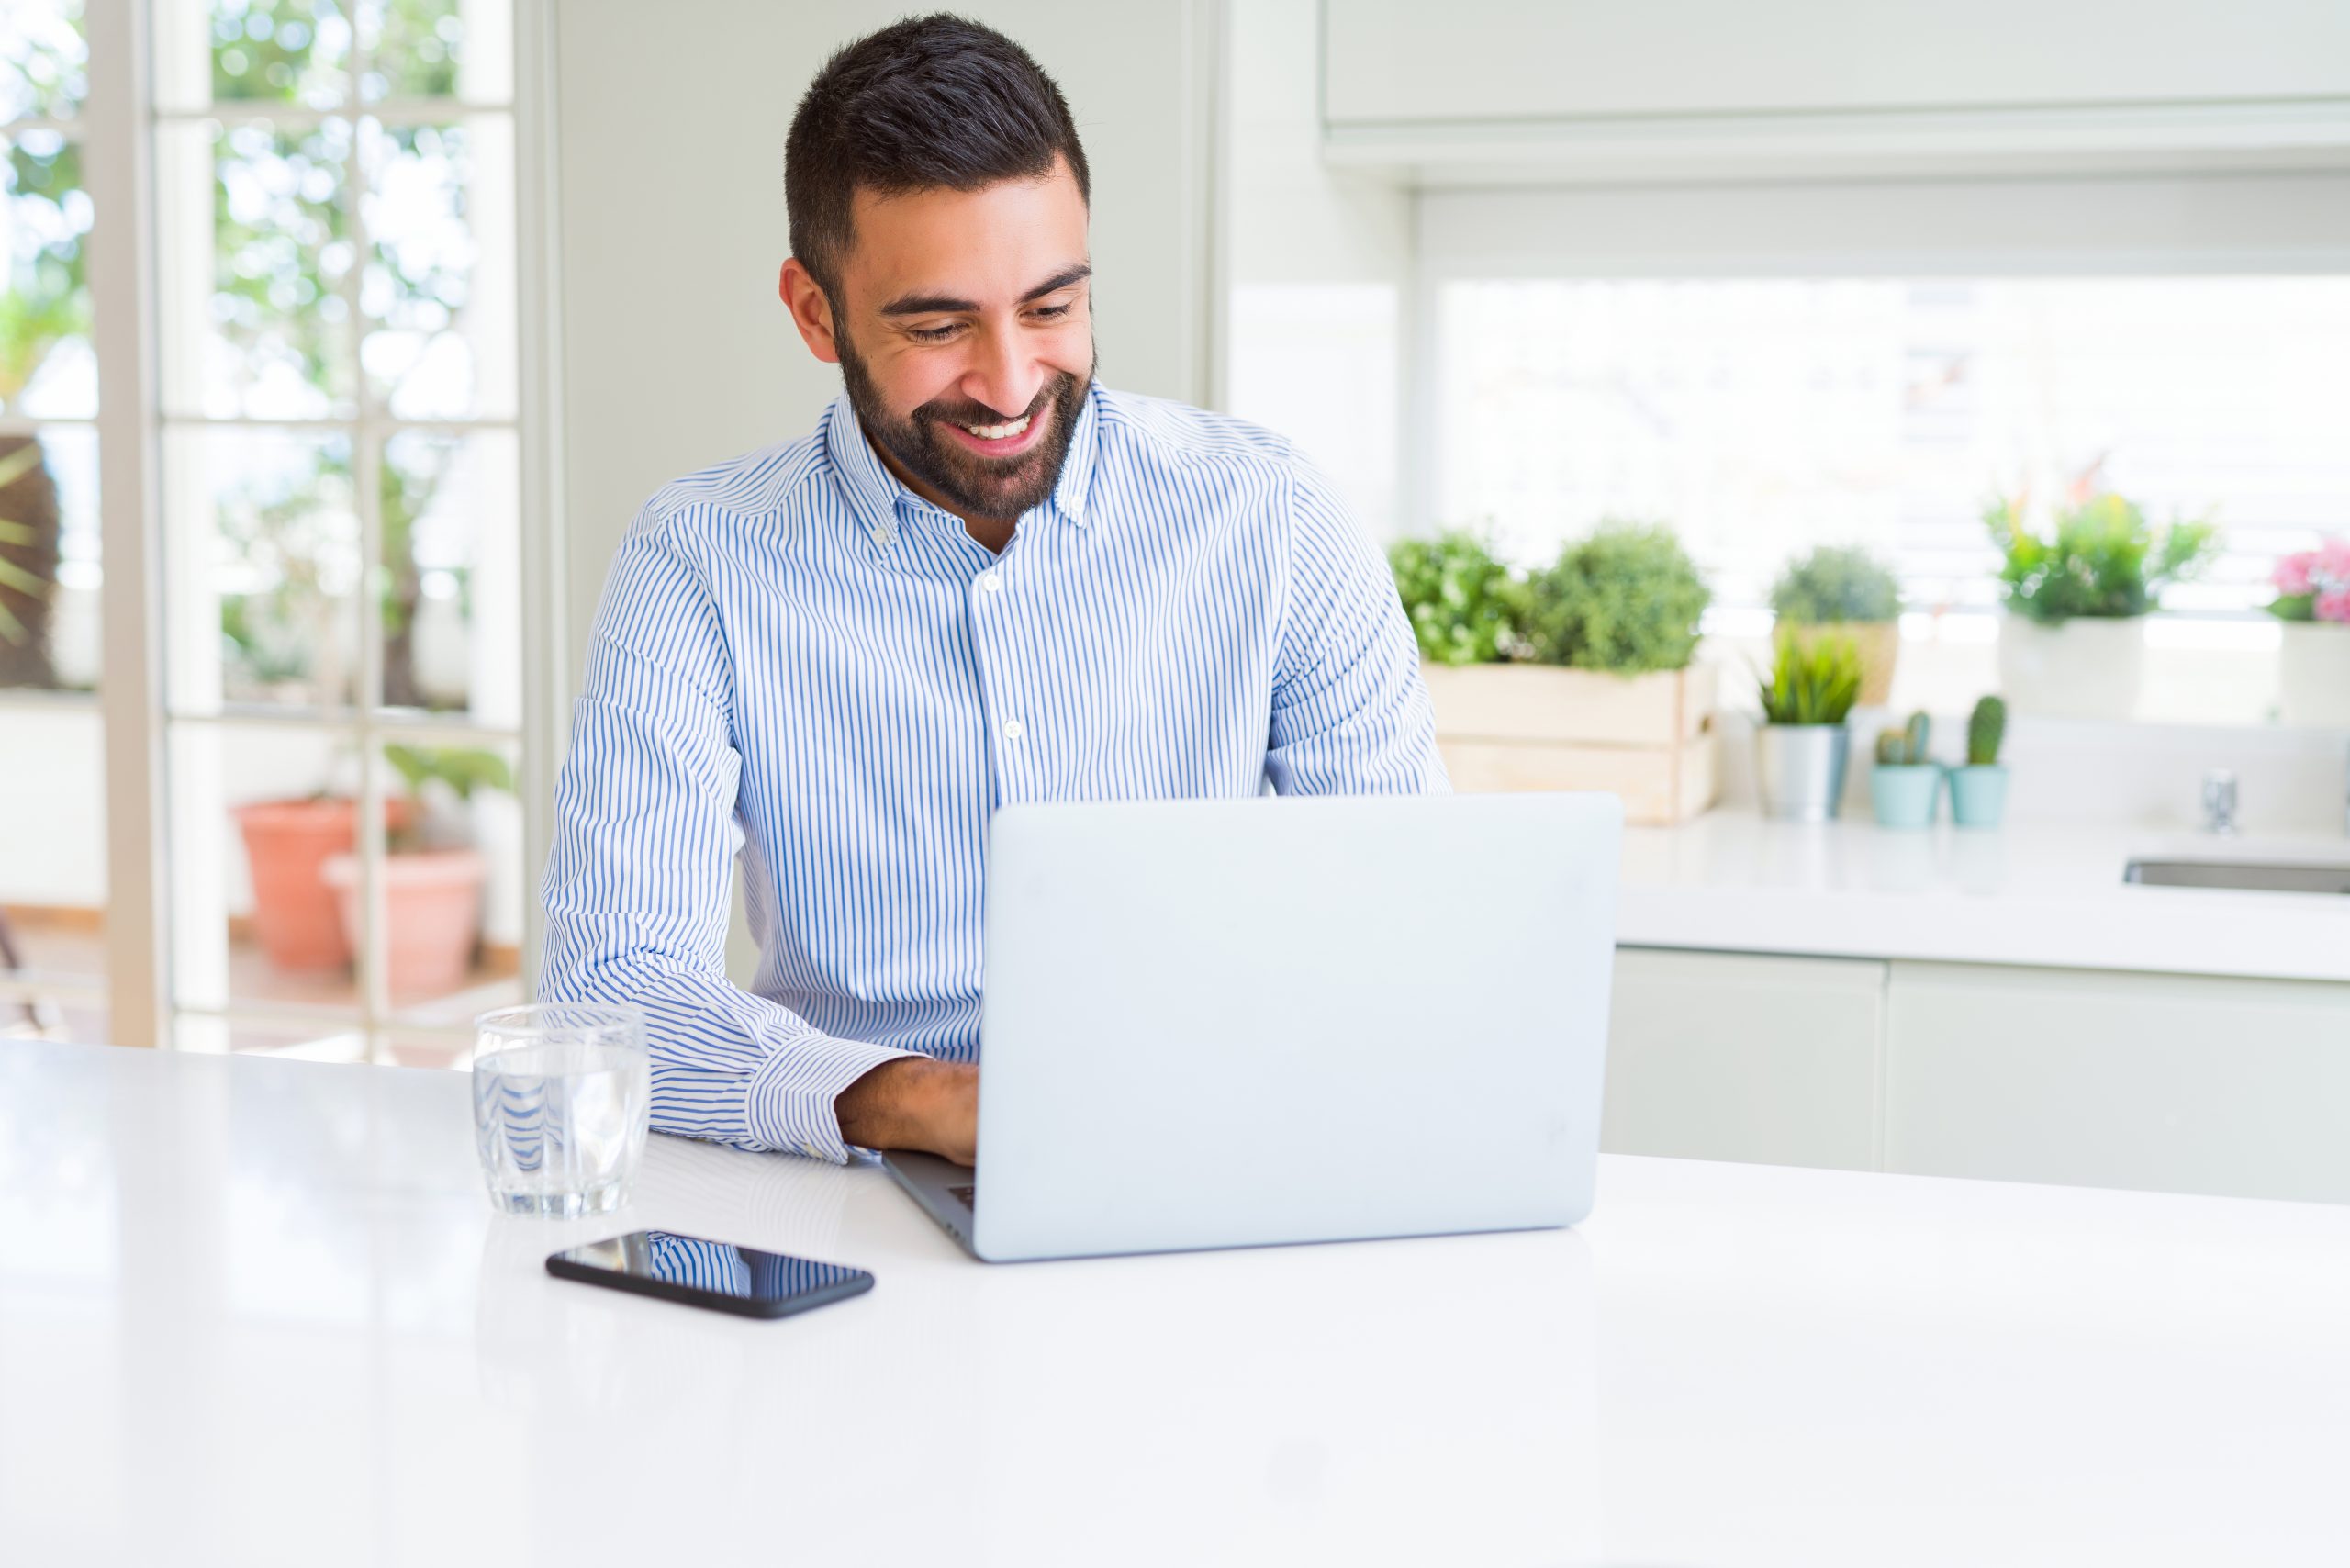 Business man smiling working using computer laptop